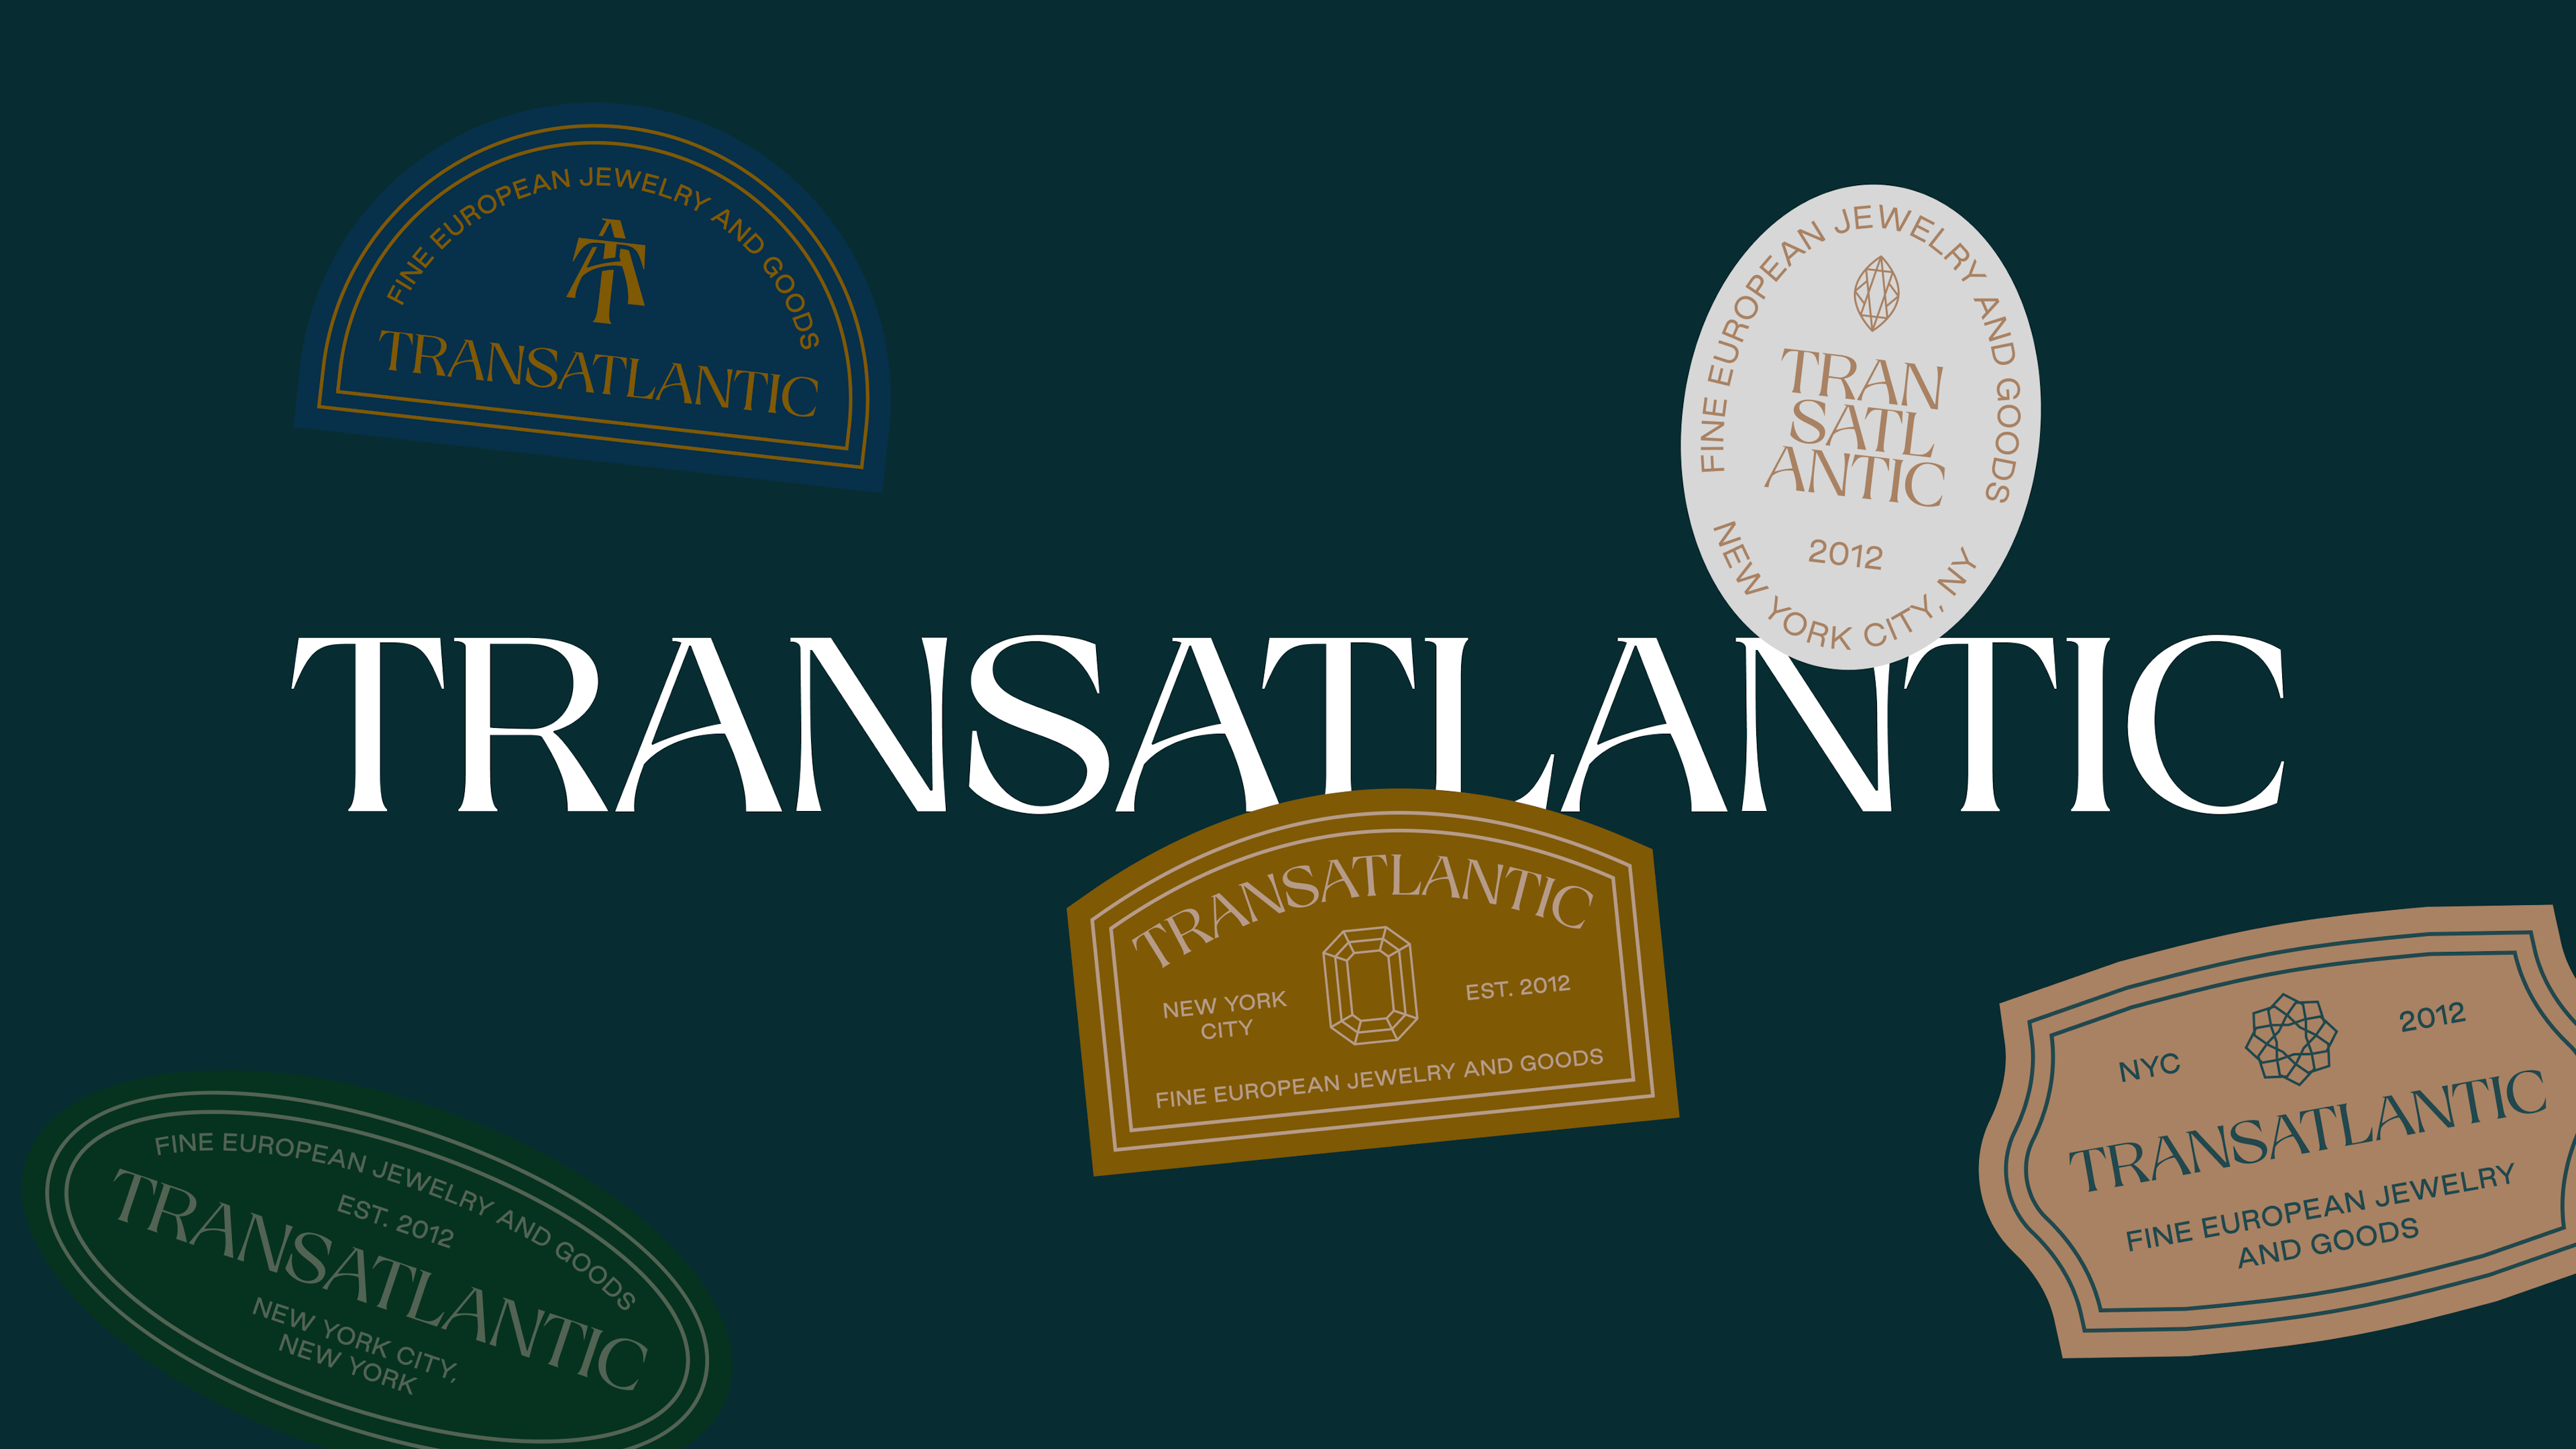 Transatlantic Jewels Brand Identity design by View Source